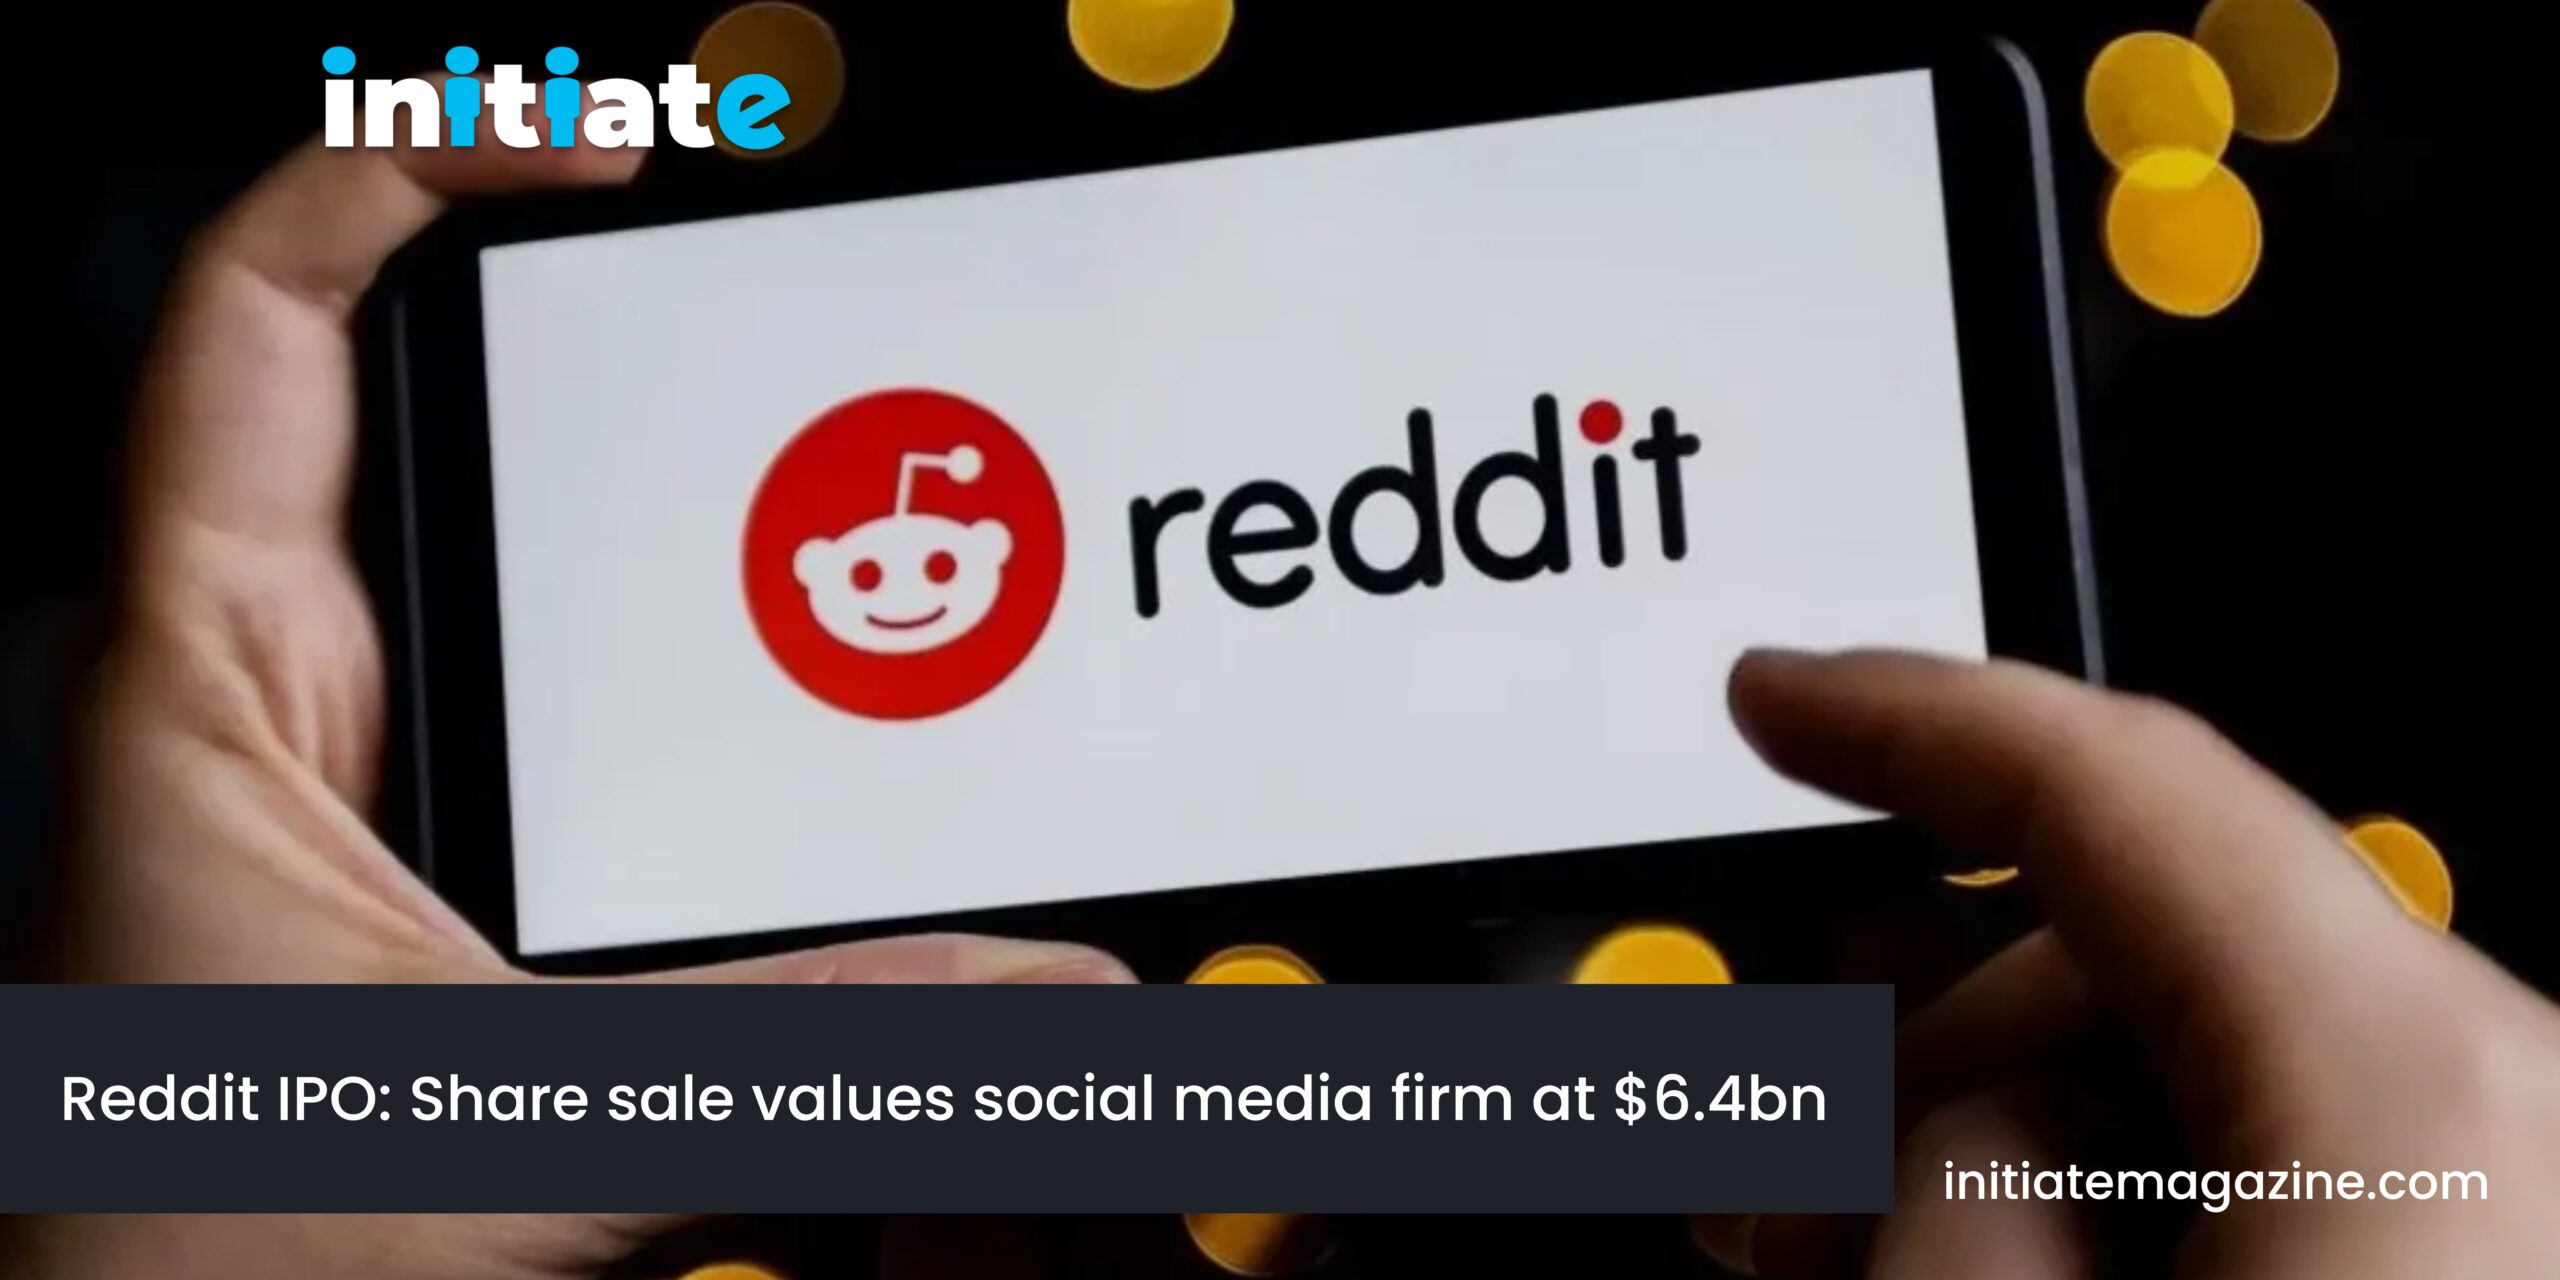 Reddit IPO: Share sale values social media firm at $6.4bn